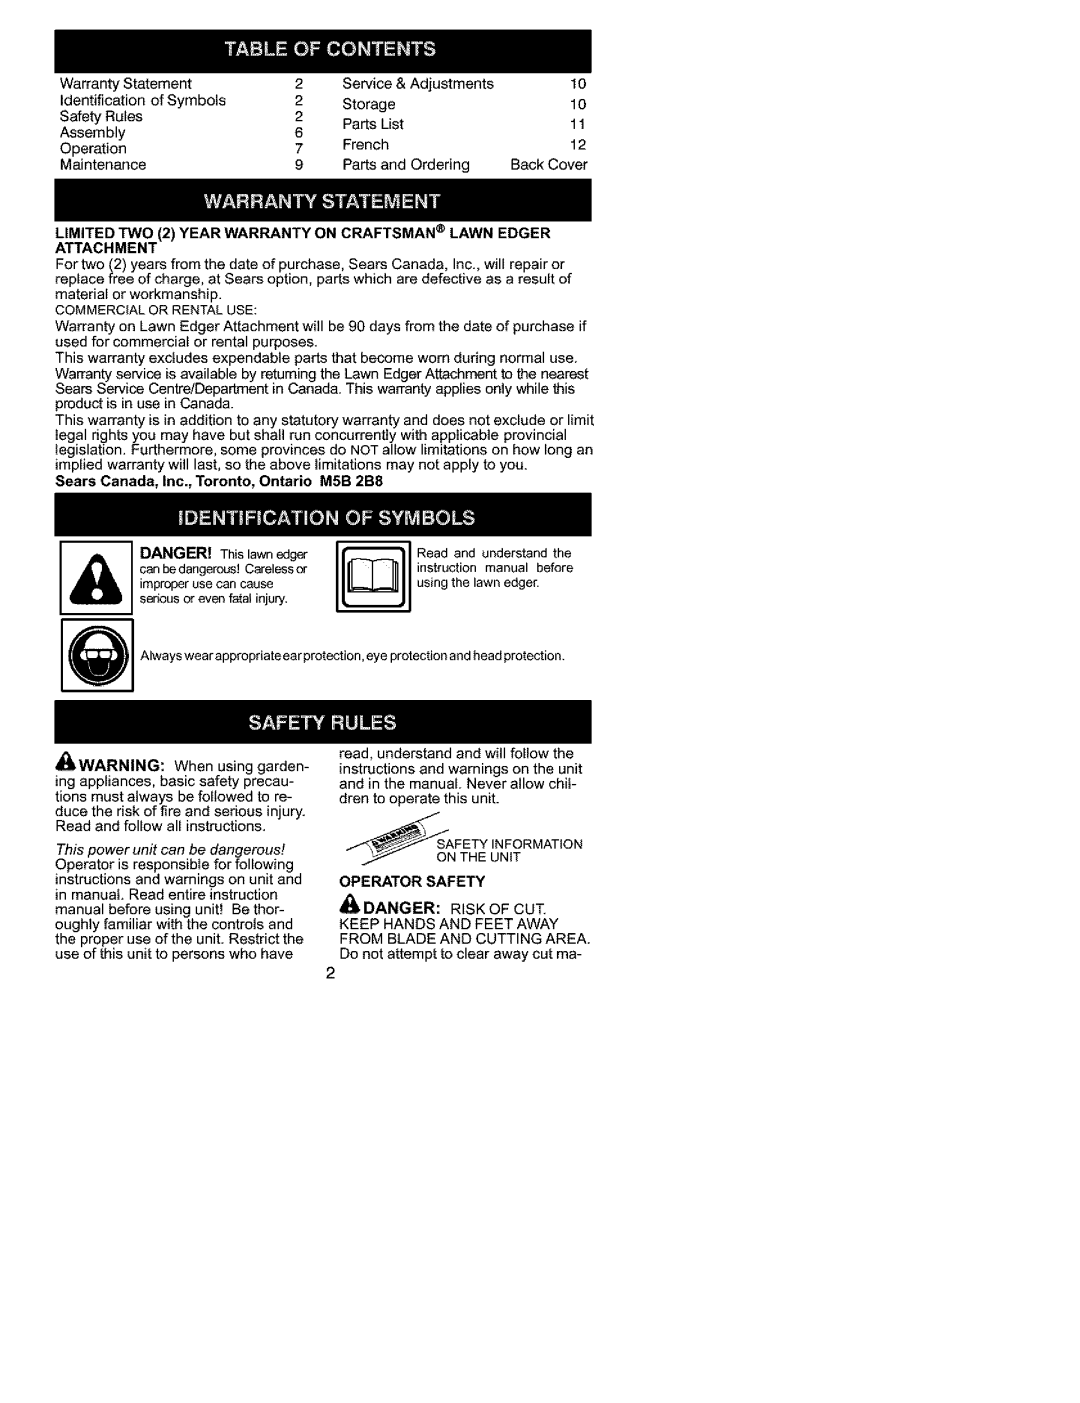 Craftsman C944.511572 instruction manual Attachment, Danger Risk Of Cut 